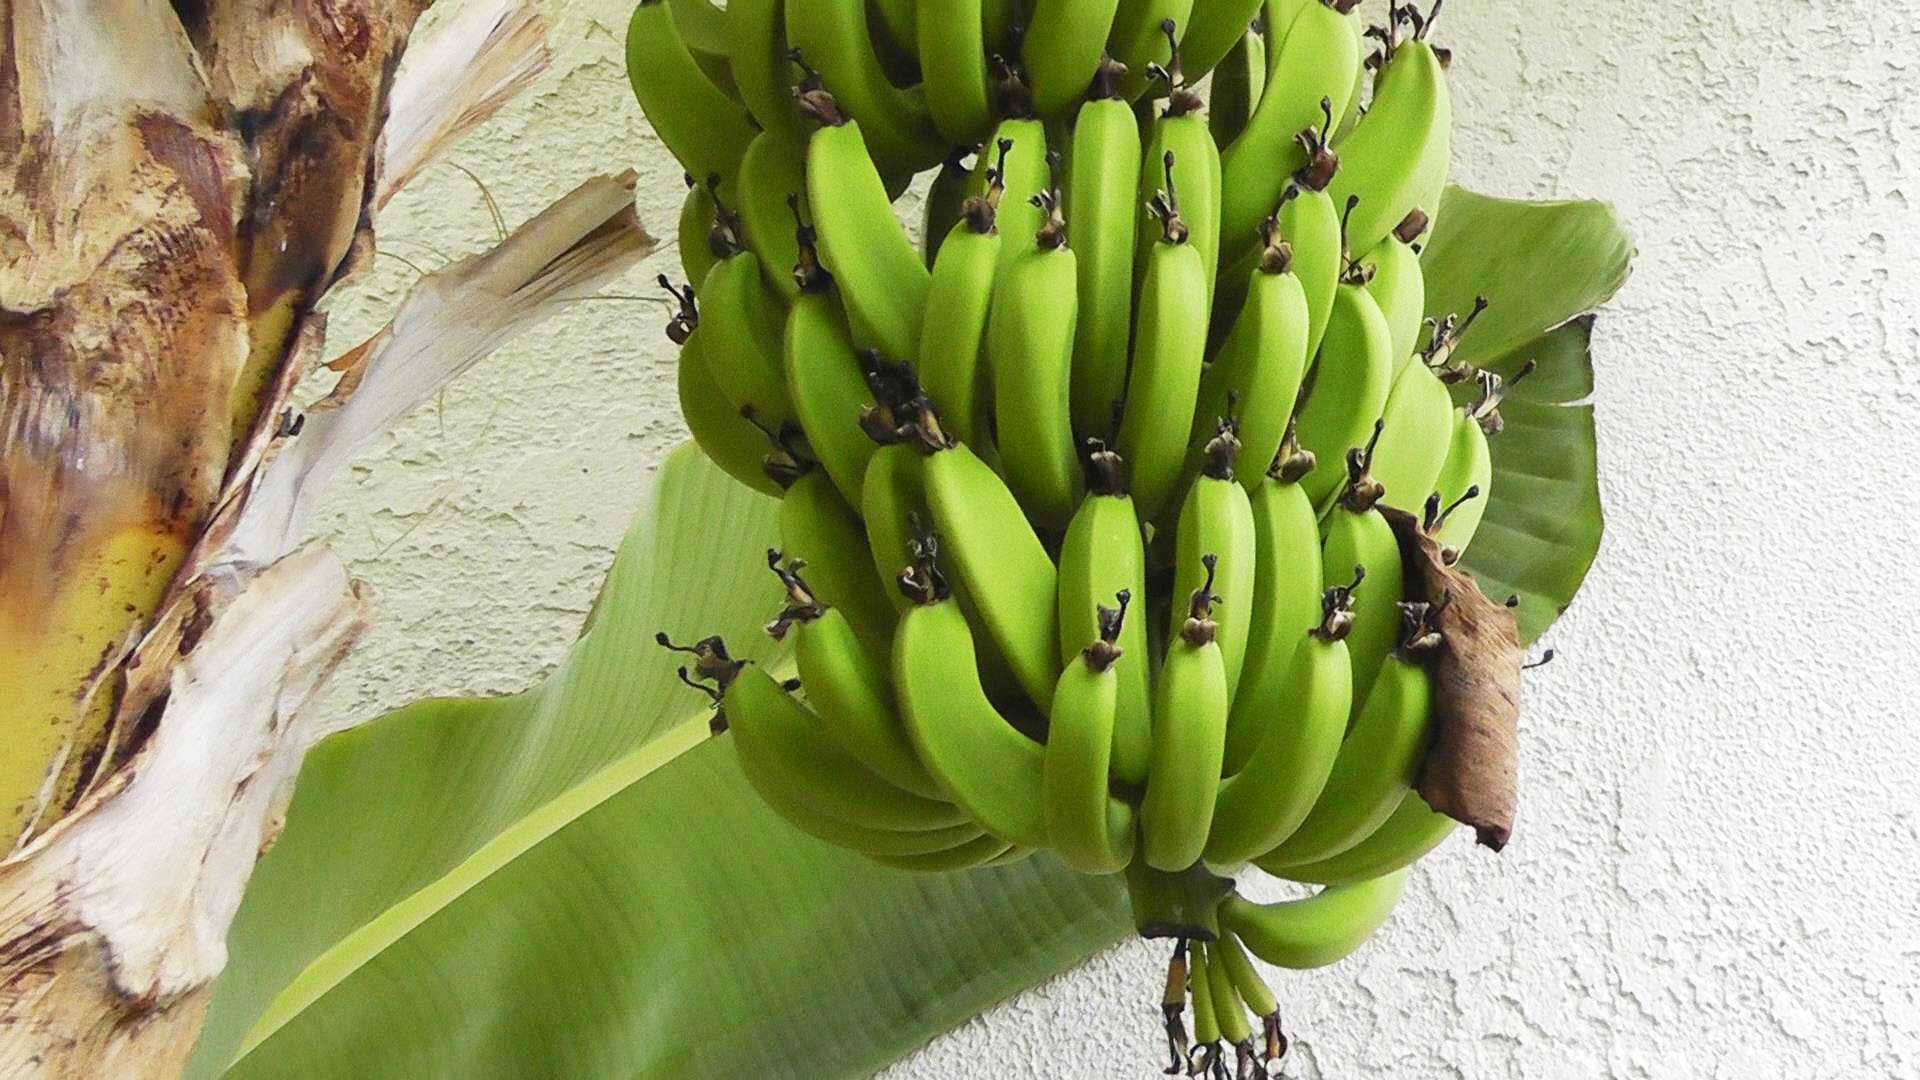 Grow & Harvest Bananas - flowers, fruits & stems of the banana plant ...